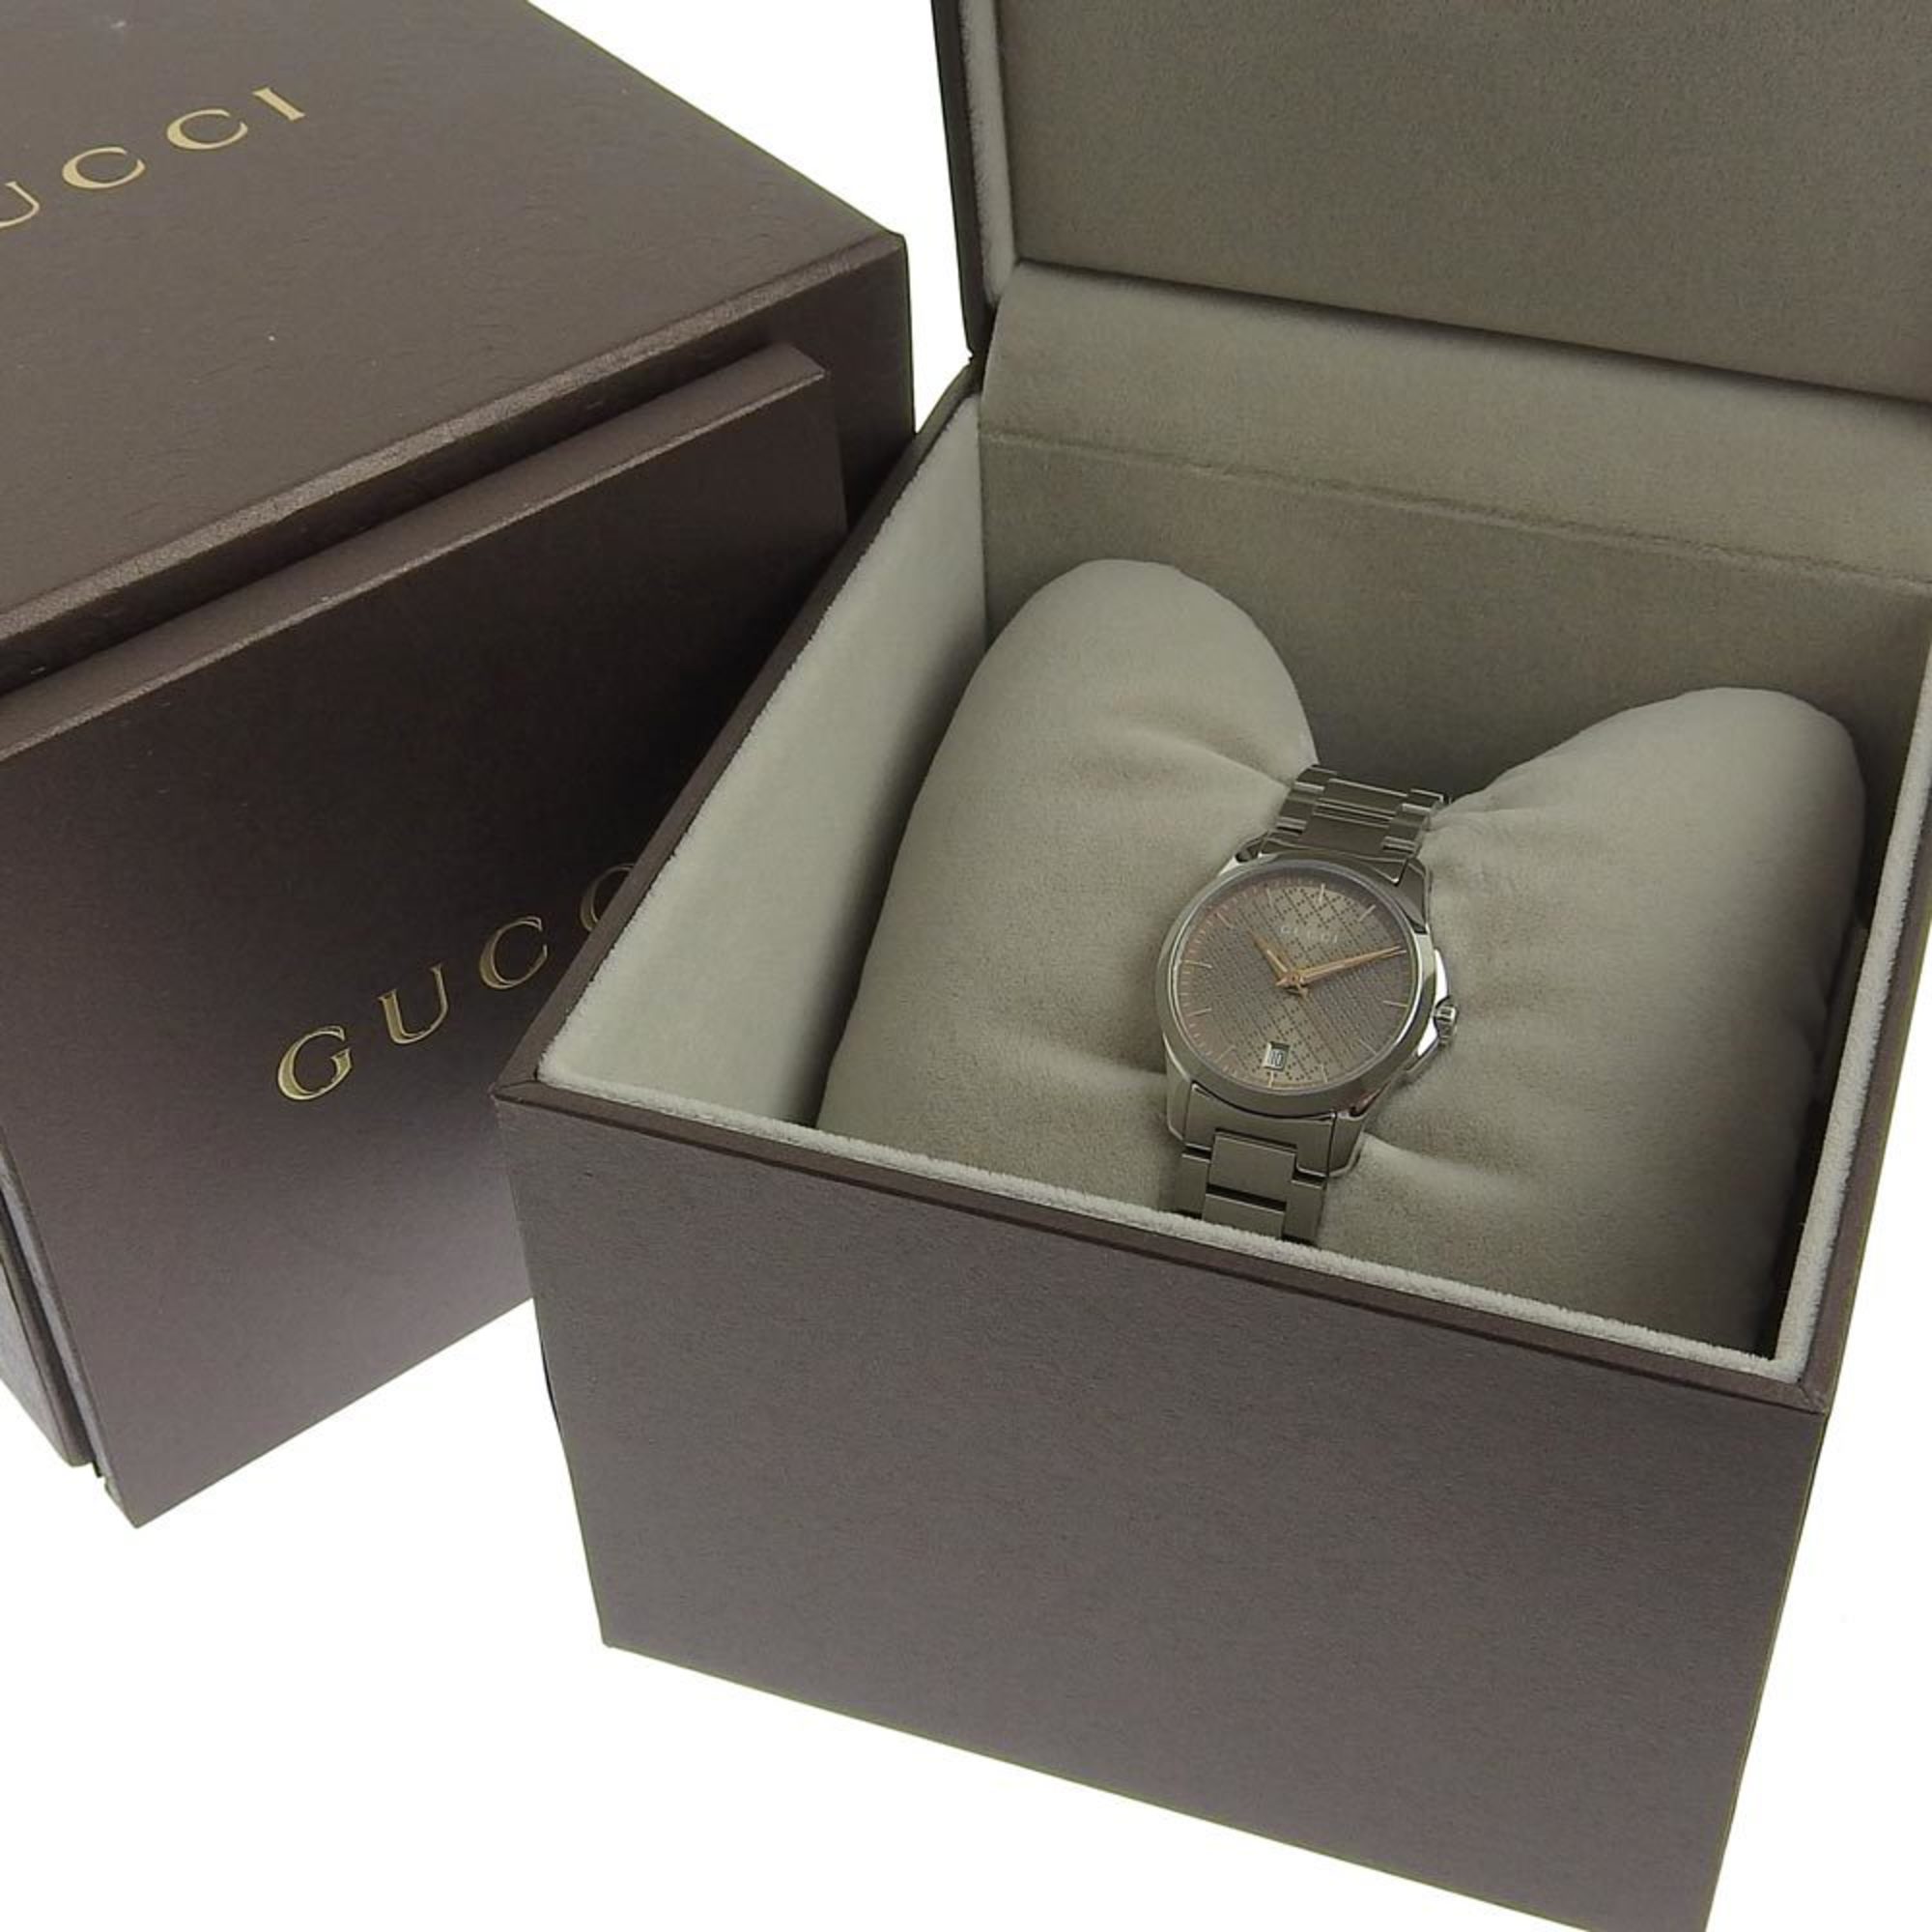 Gucci GUCCI G Timeless Date Ladies Quartz Battery Watch 126 5 YA126594